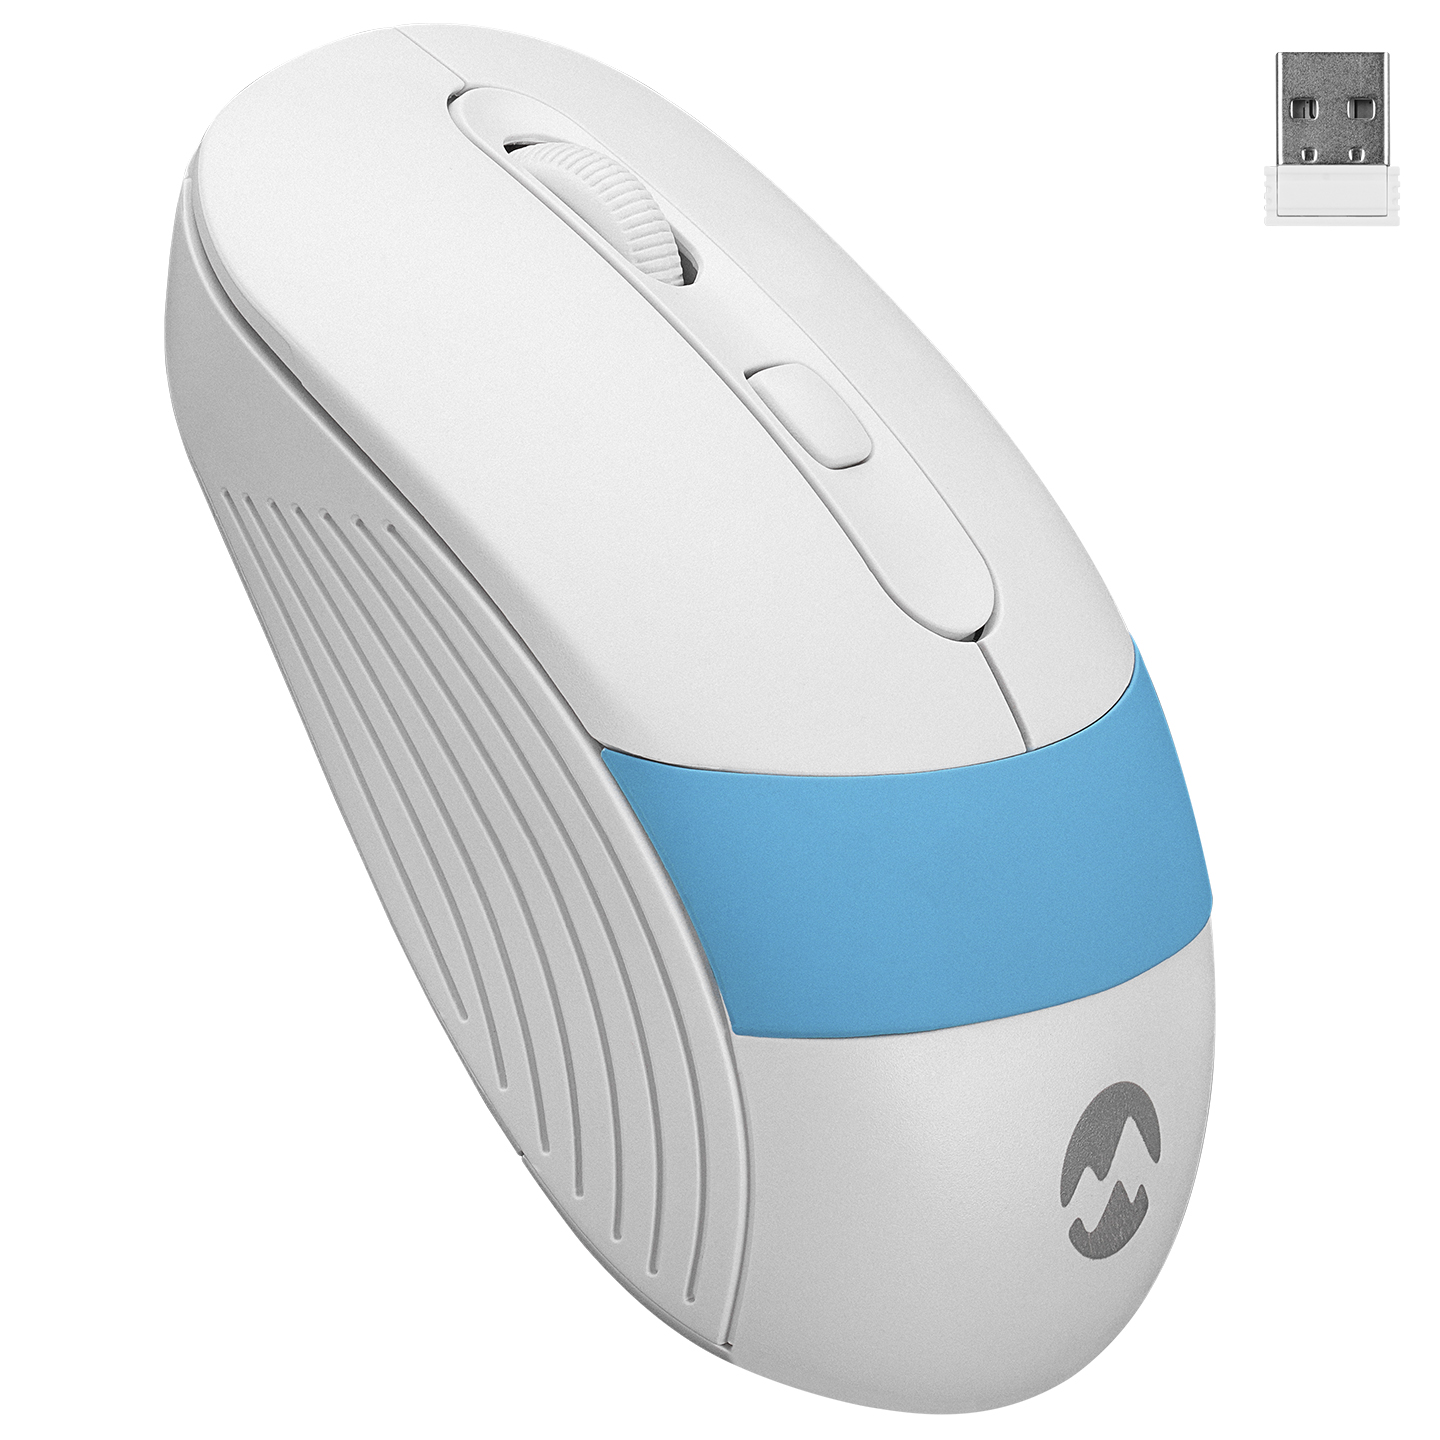 Everest SM-18 Usb Beyaz/Mavi 2.4Ghz Optik Kablosuz Mouse